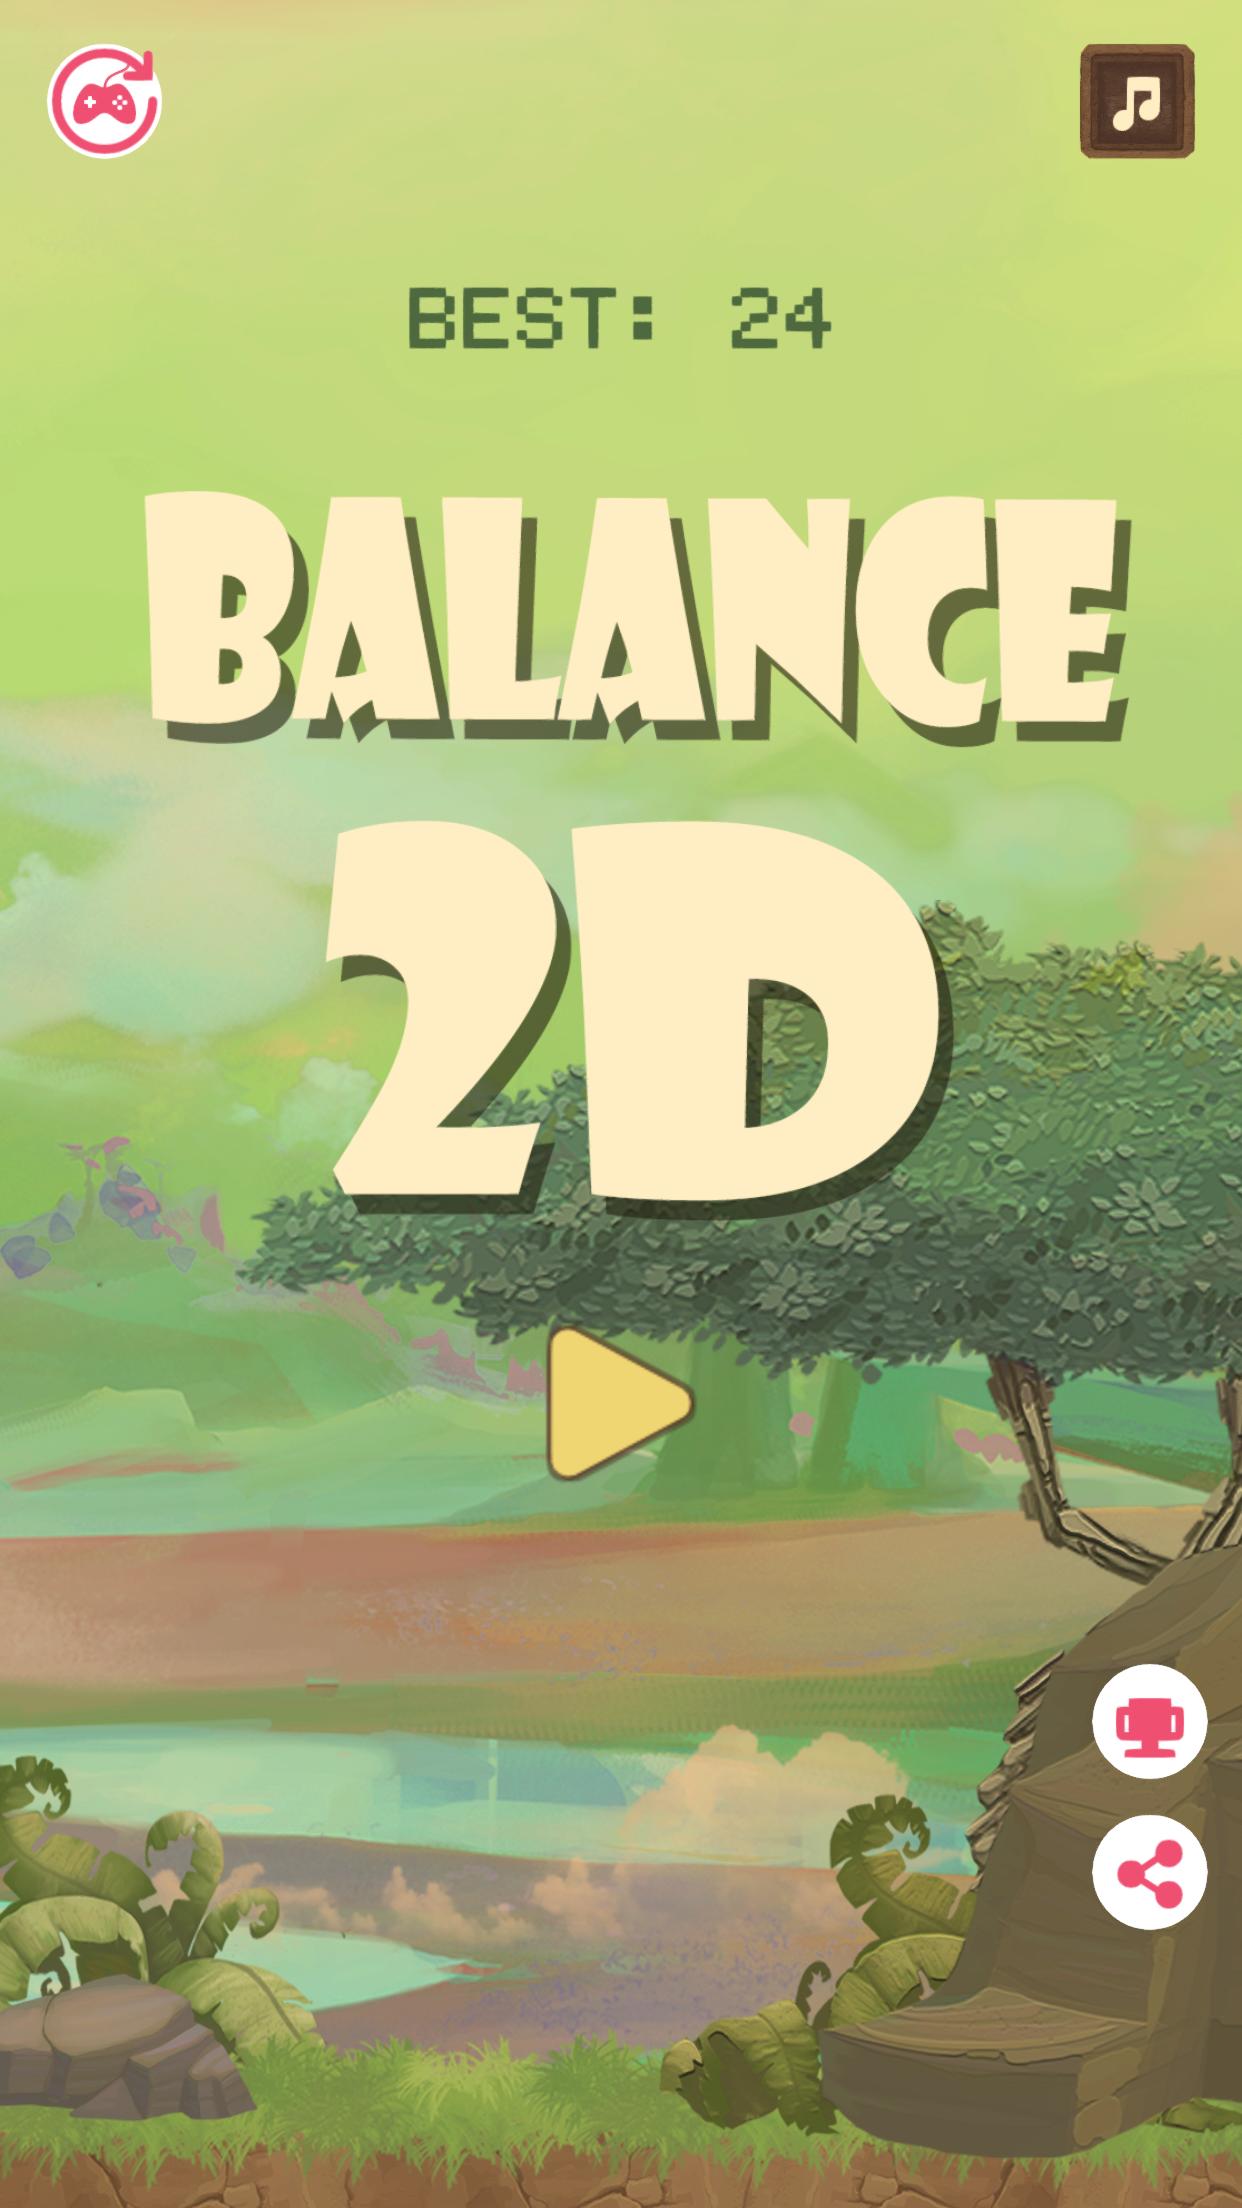 Баланс epic games. Android Balance game. Balance. Remainders 2.7.2 APK.